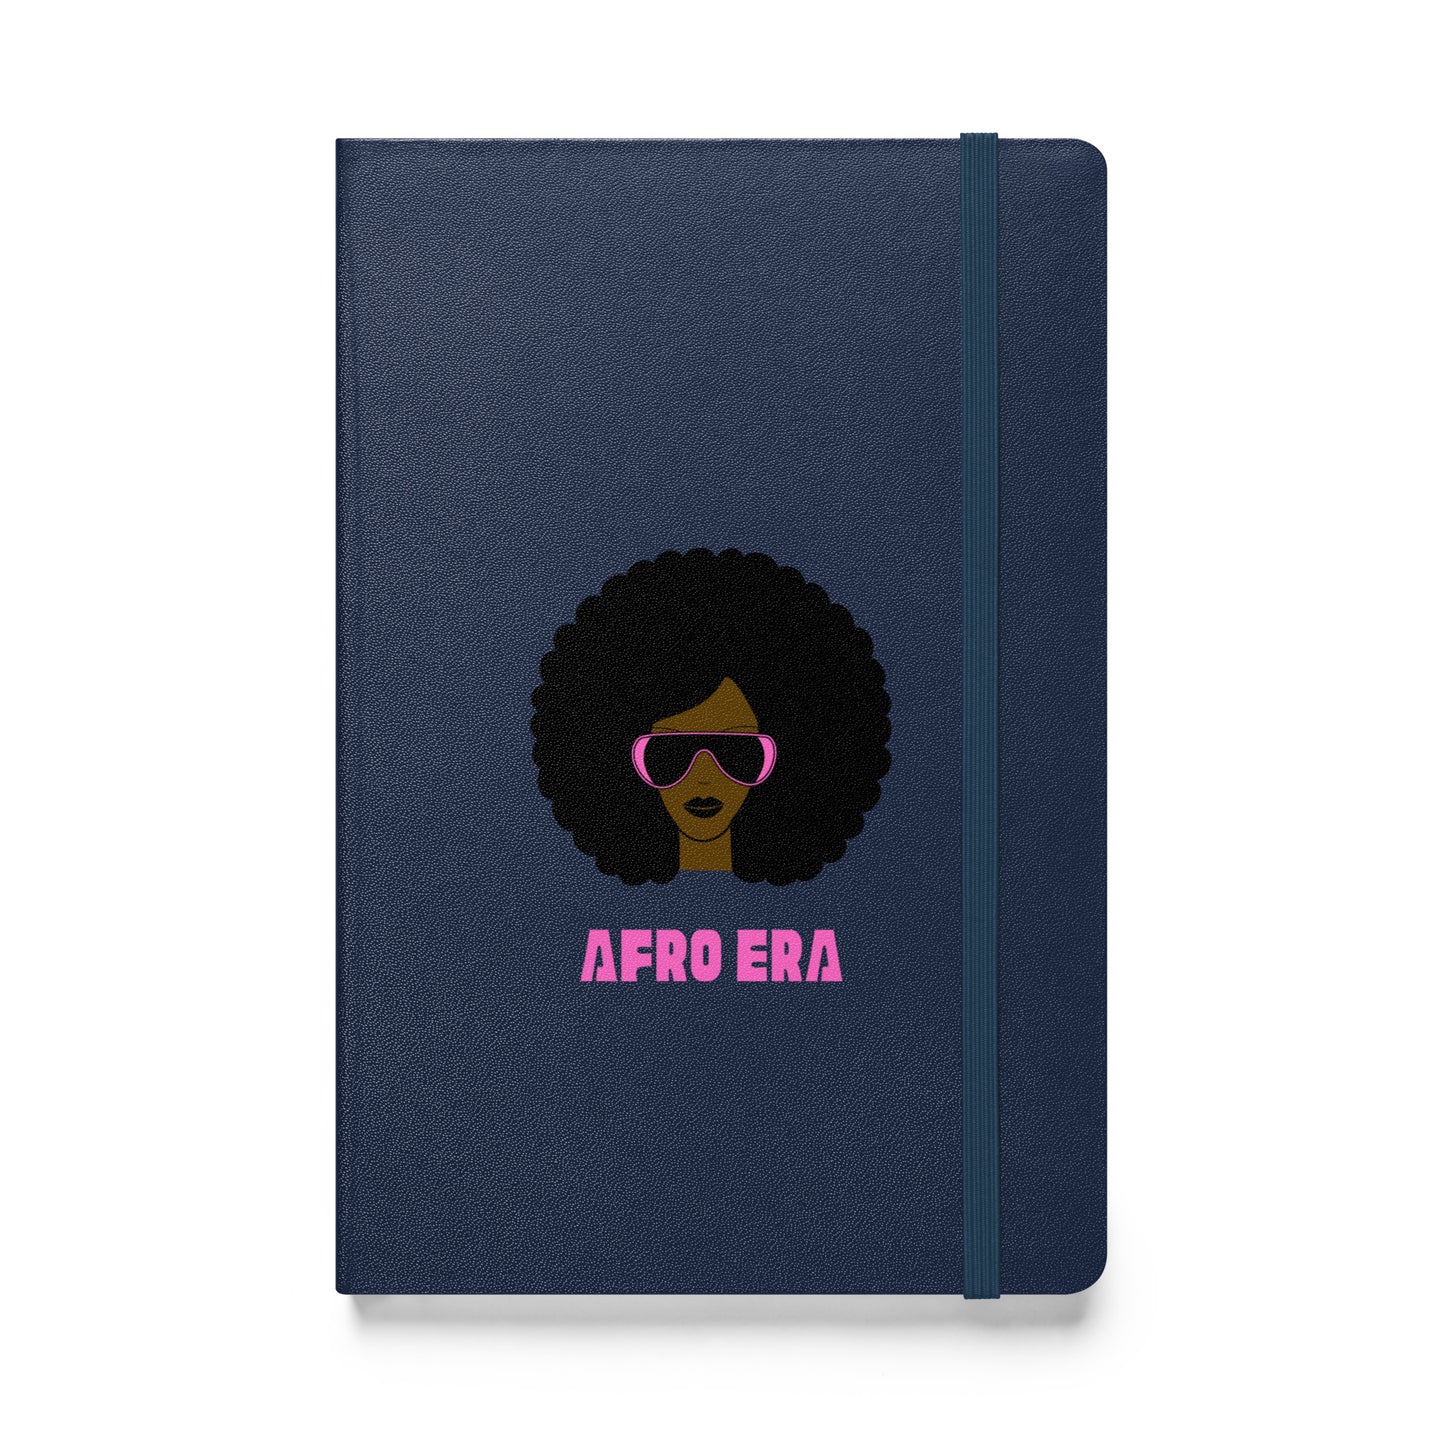 AFRO ERA Hardcover bound notebook